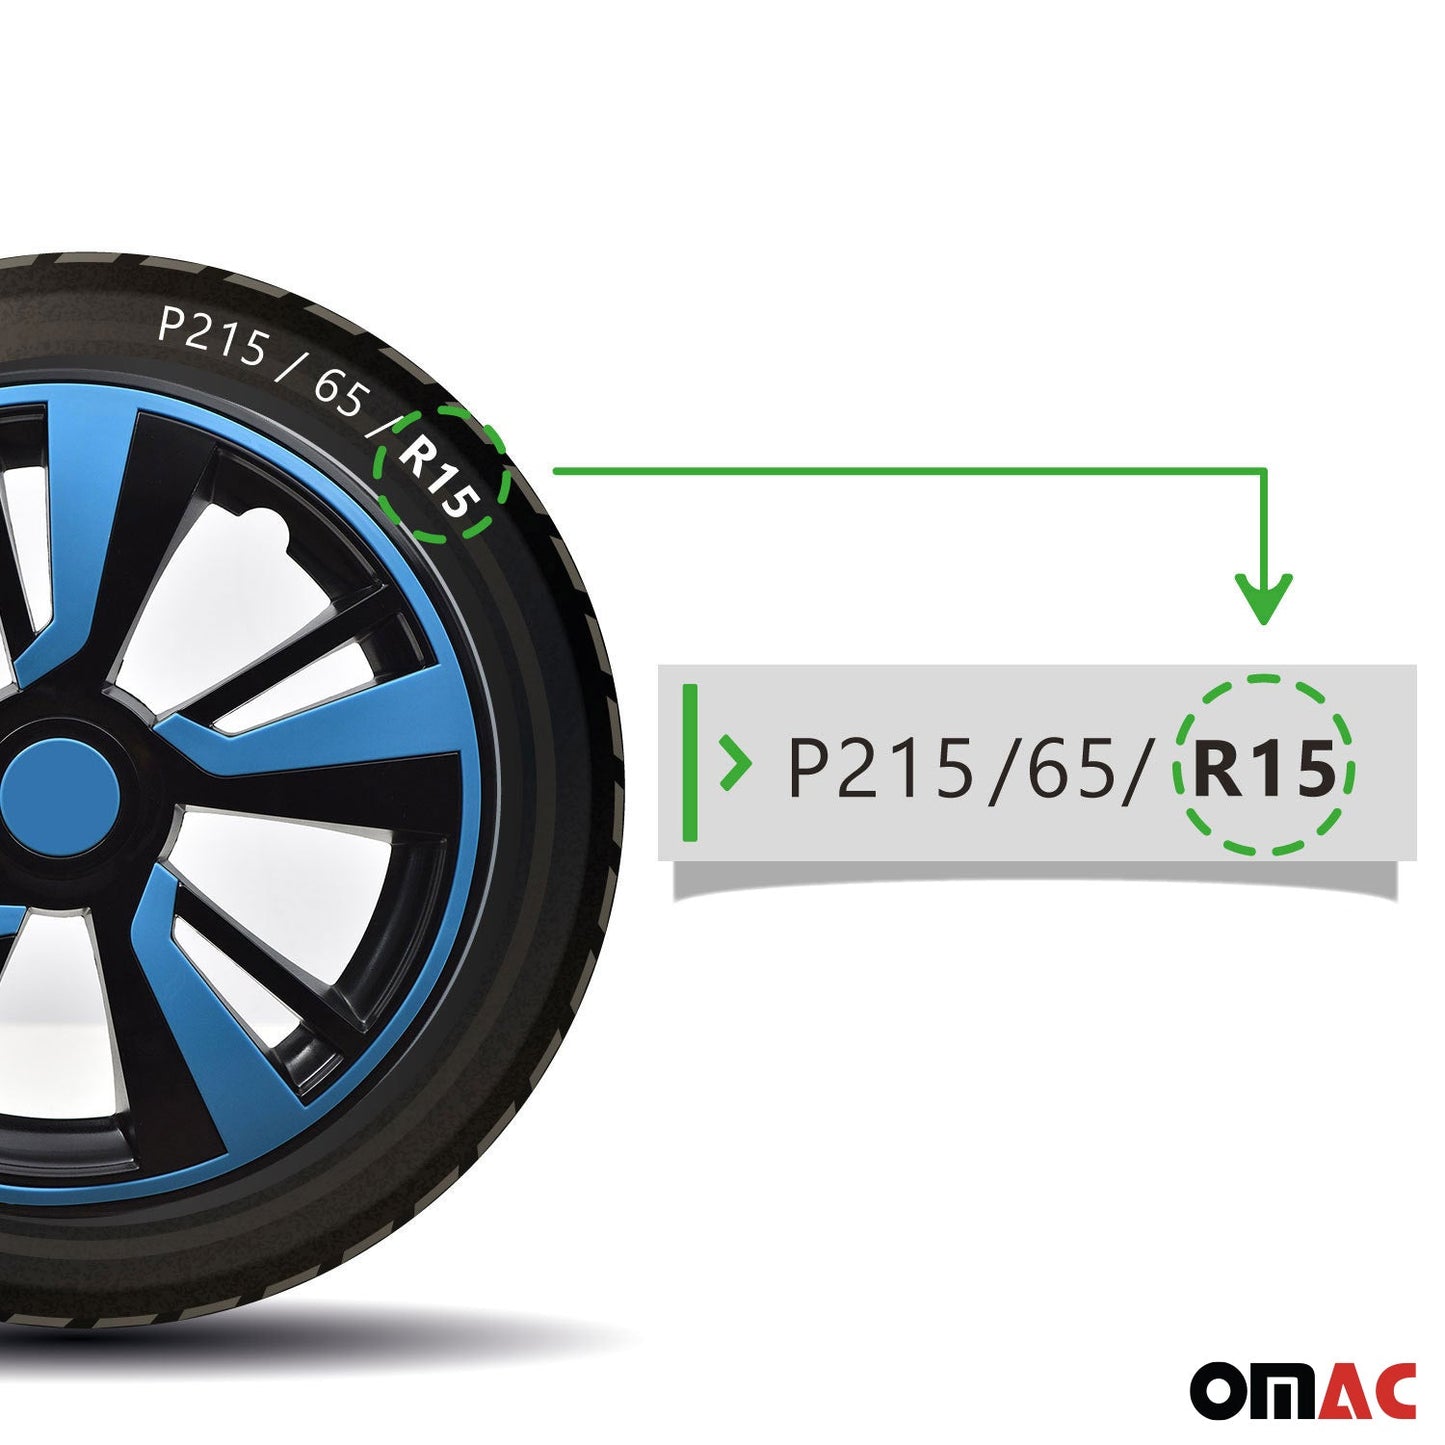 OMAC 15" Hubcaps Wheel Rim Cover Black with Blue Insert 4pcs Set VRT99FR243B15B